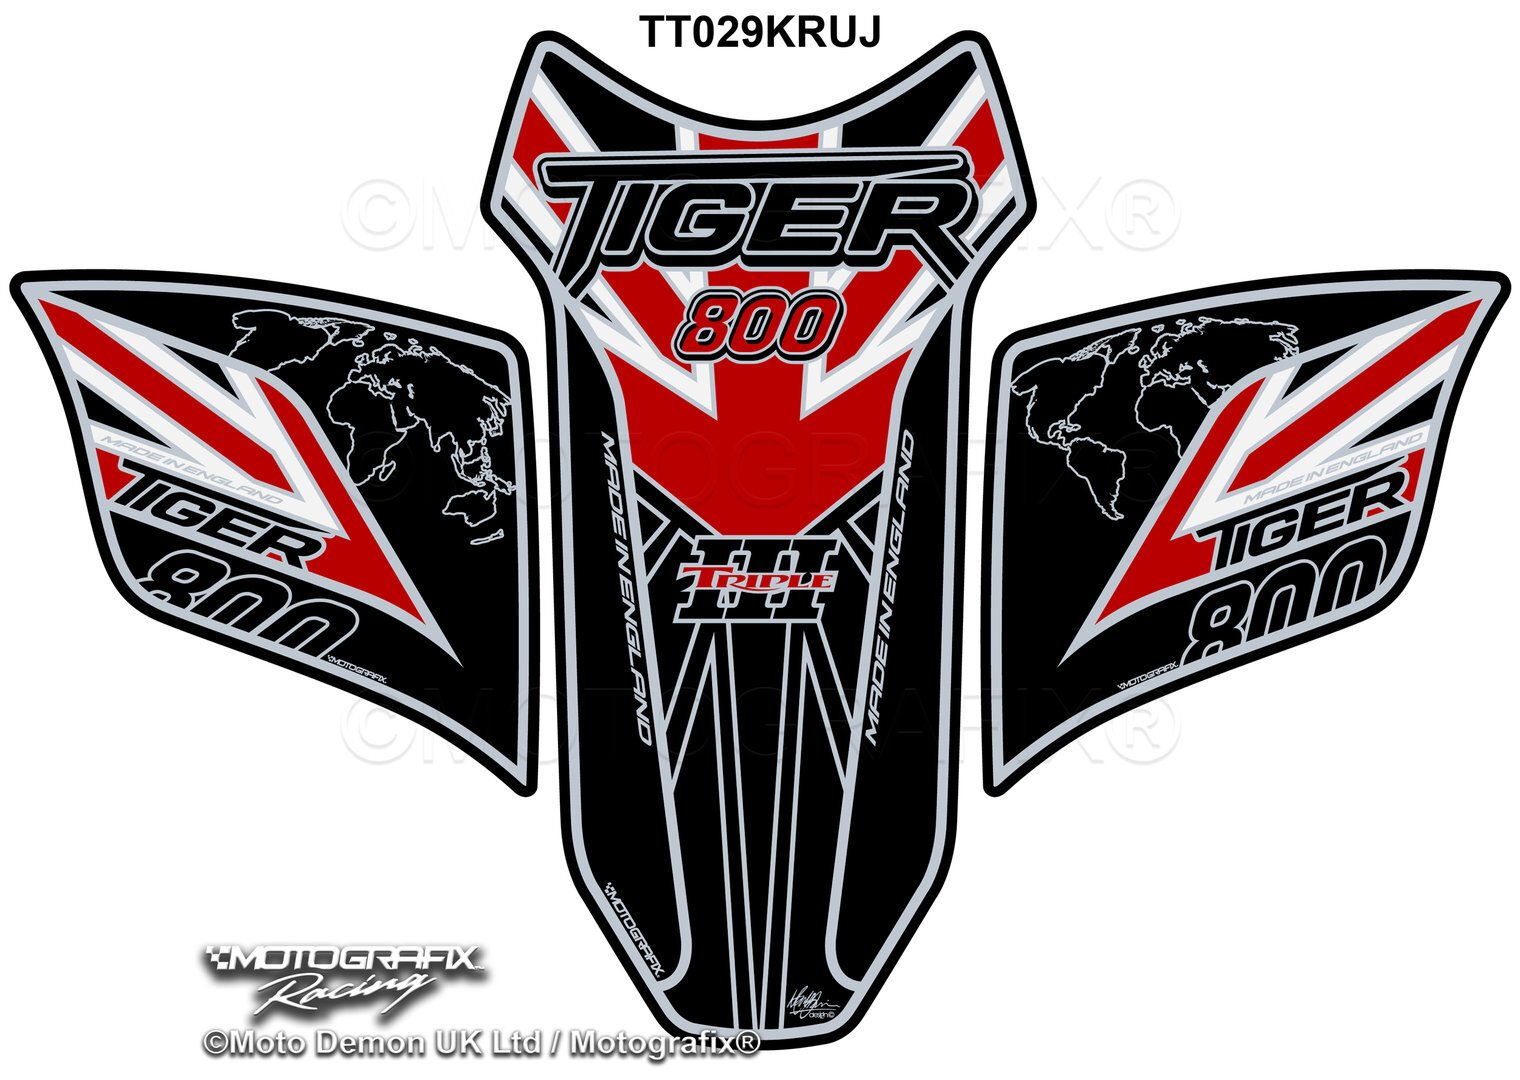 Triumph Tiger 800 2010 - 17 Black Red Motorcycle Tank Pad Protector Motografix 3D Gel TT029KRUJ